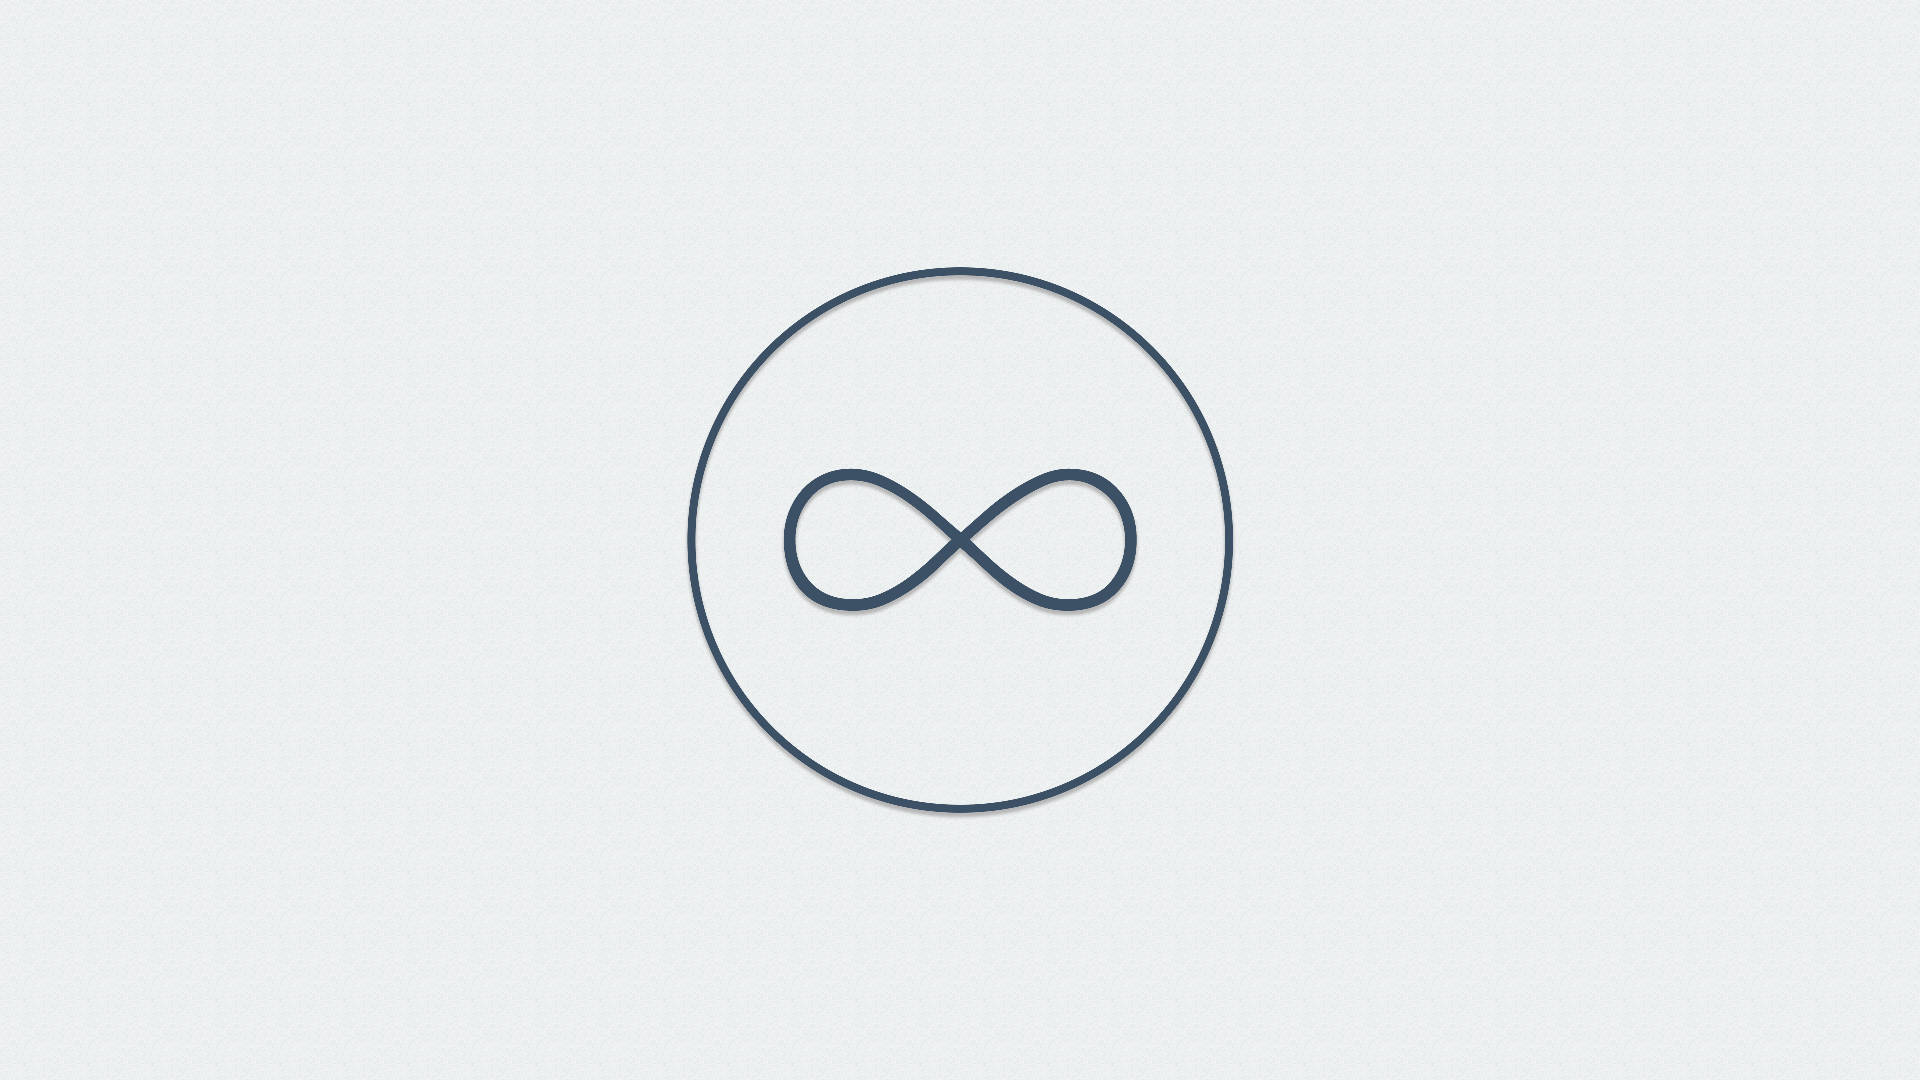 Free Infinity Symbol Wallpaper Downloads, [100+] Infinity Symbol Wallpapers  for FREE 